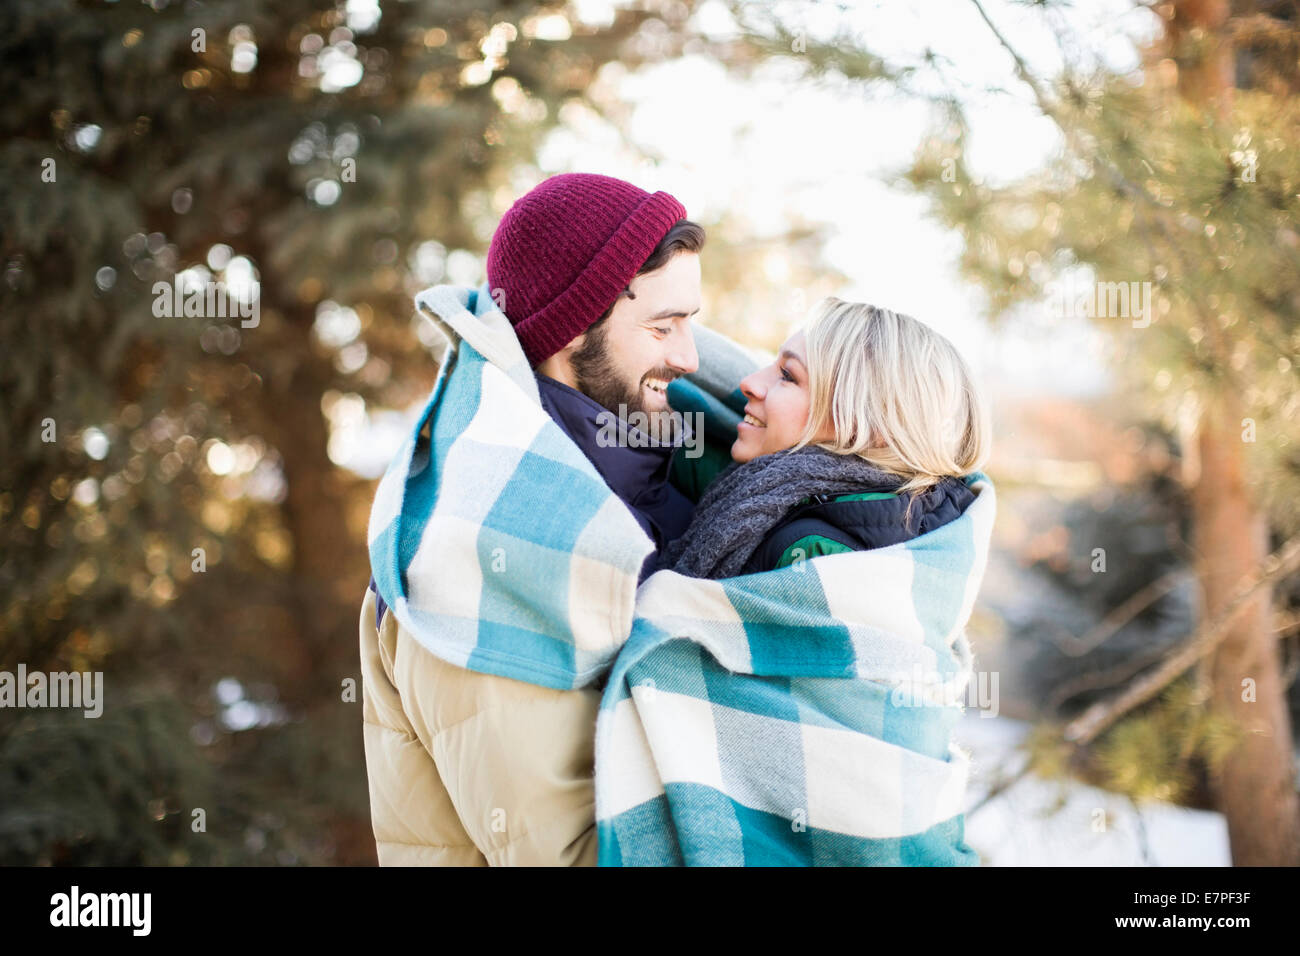 USA, Utah, Salt Lake City, Couple wrapped in blanket hugging outdoors Stock Photo